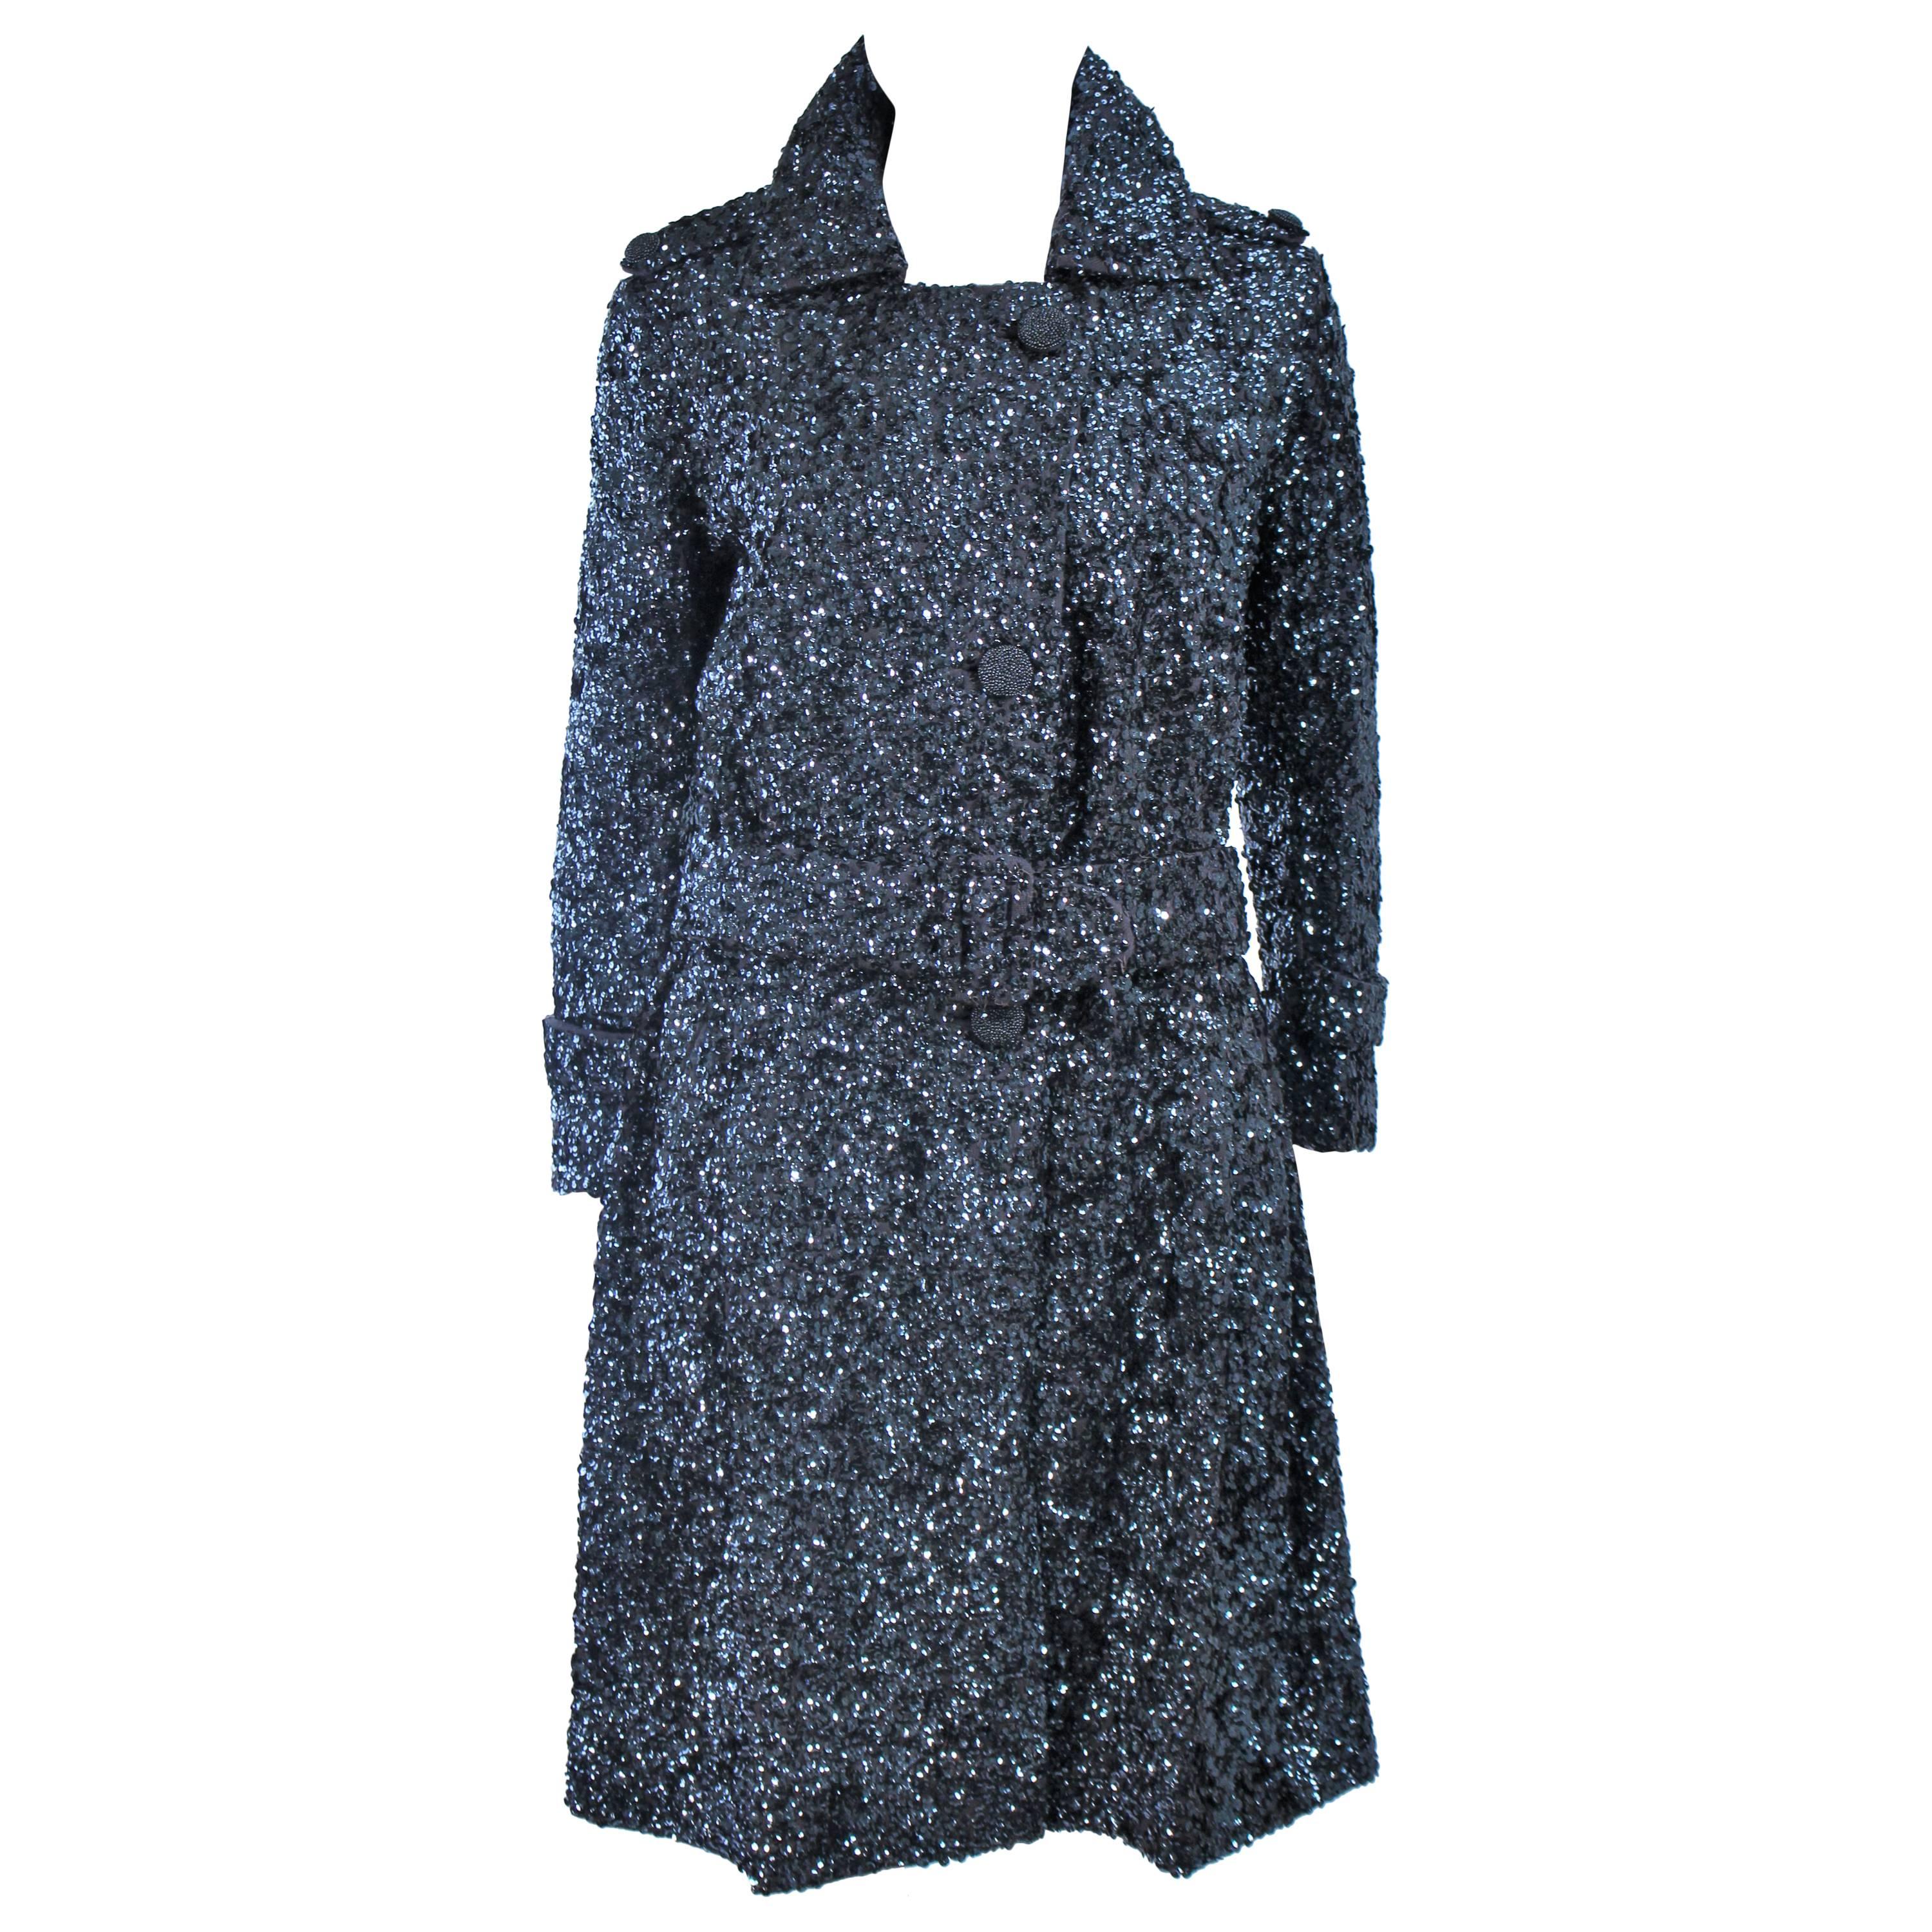 BULLOCKS WILSHIRE Gunmetal Wool Sequin Trench Coat Size 6 For Sale